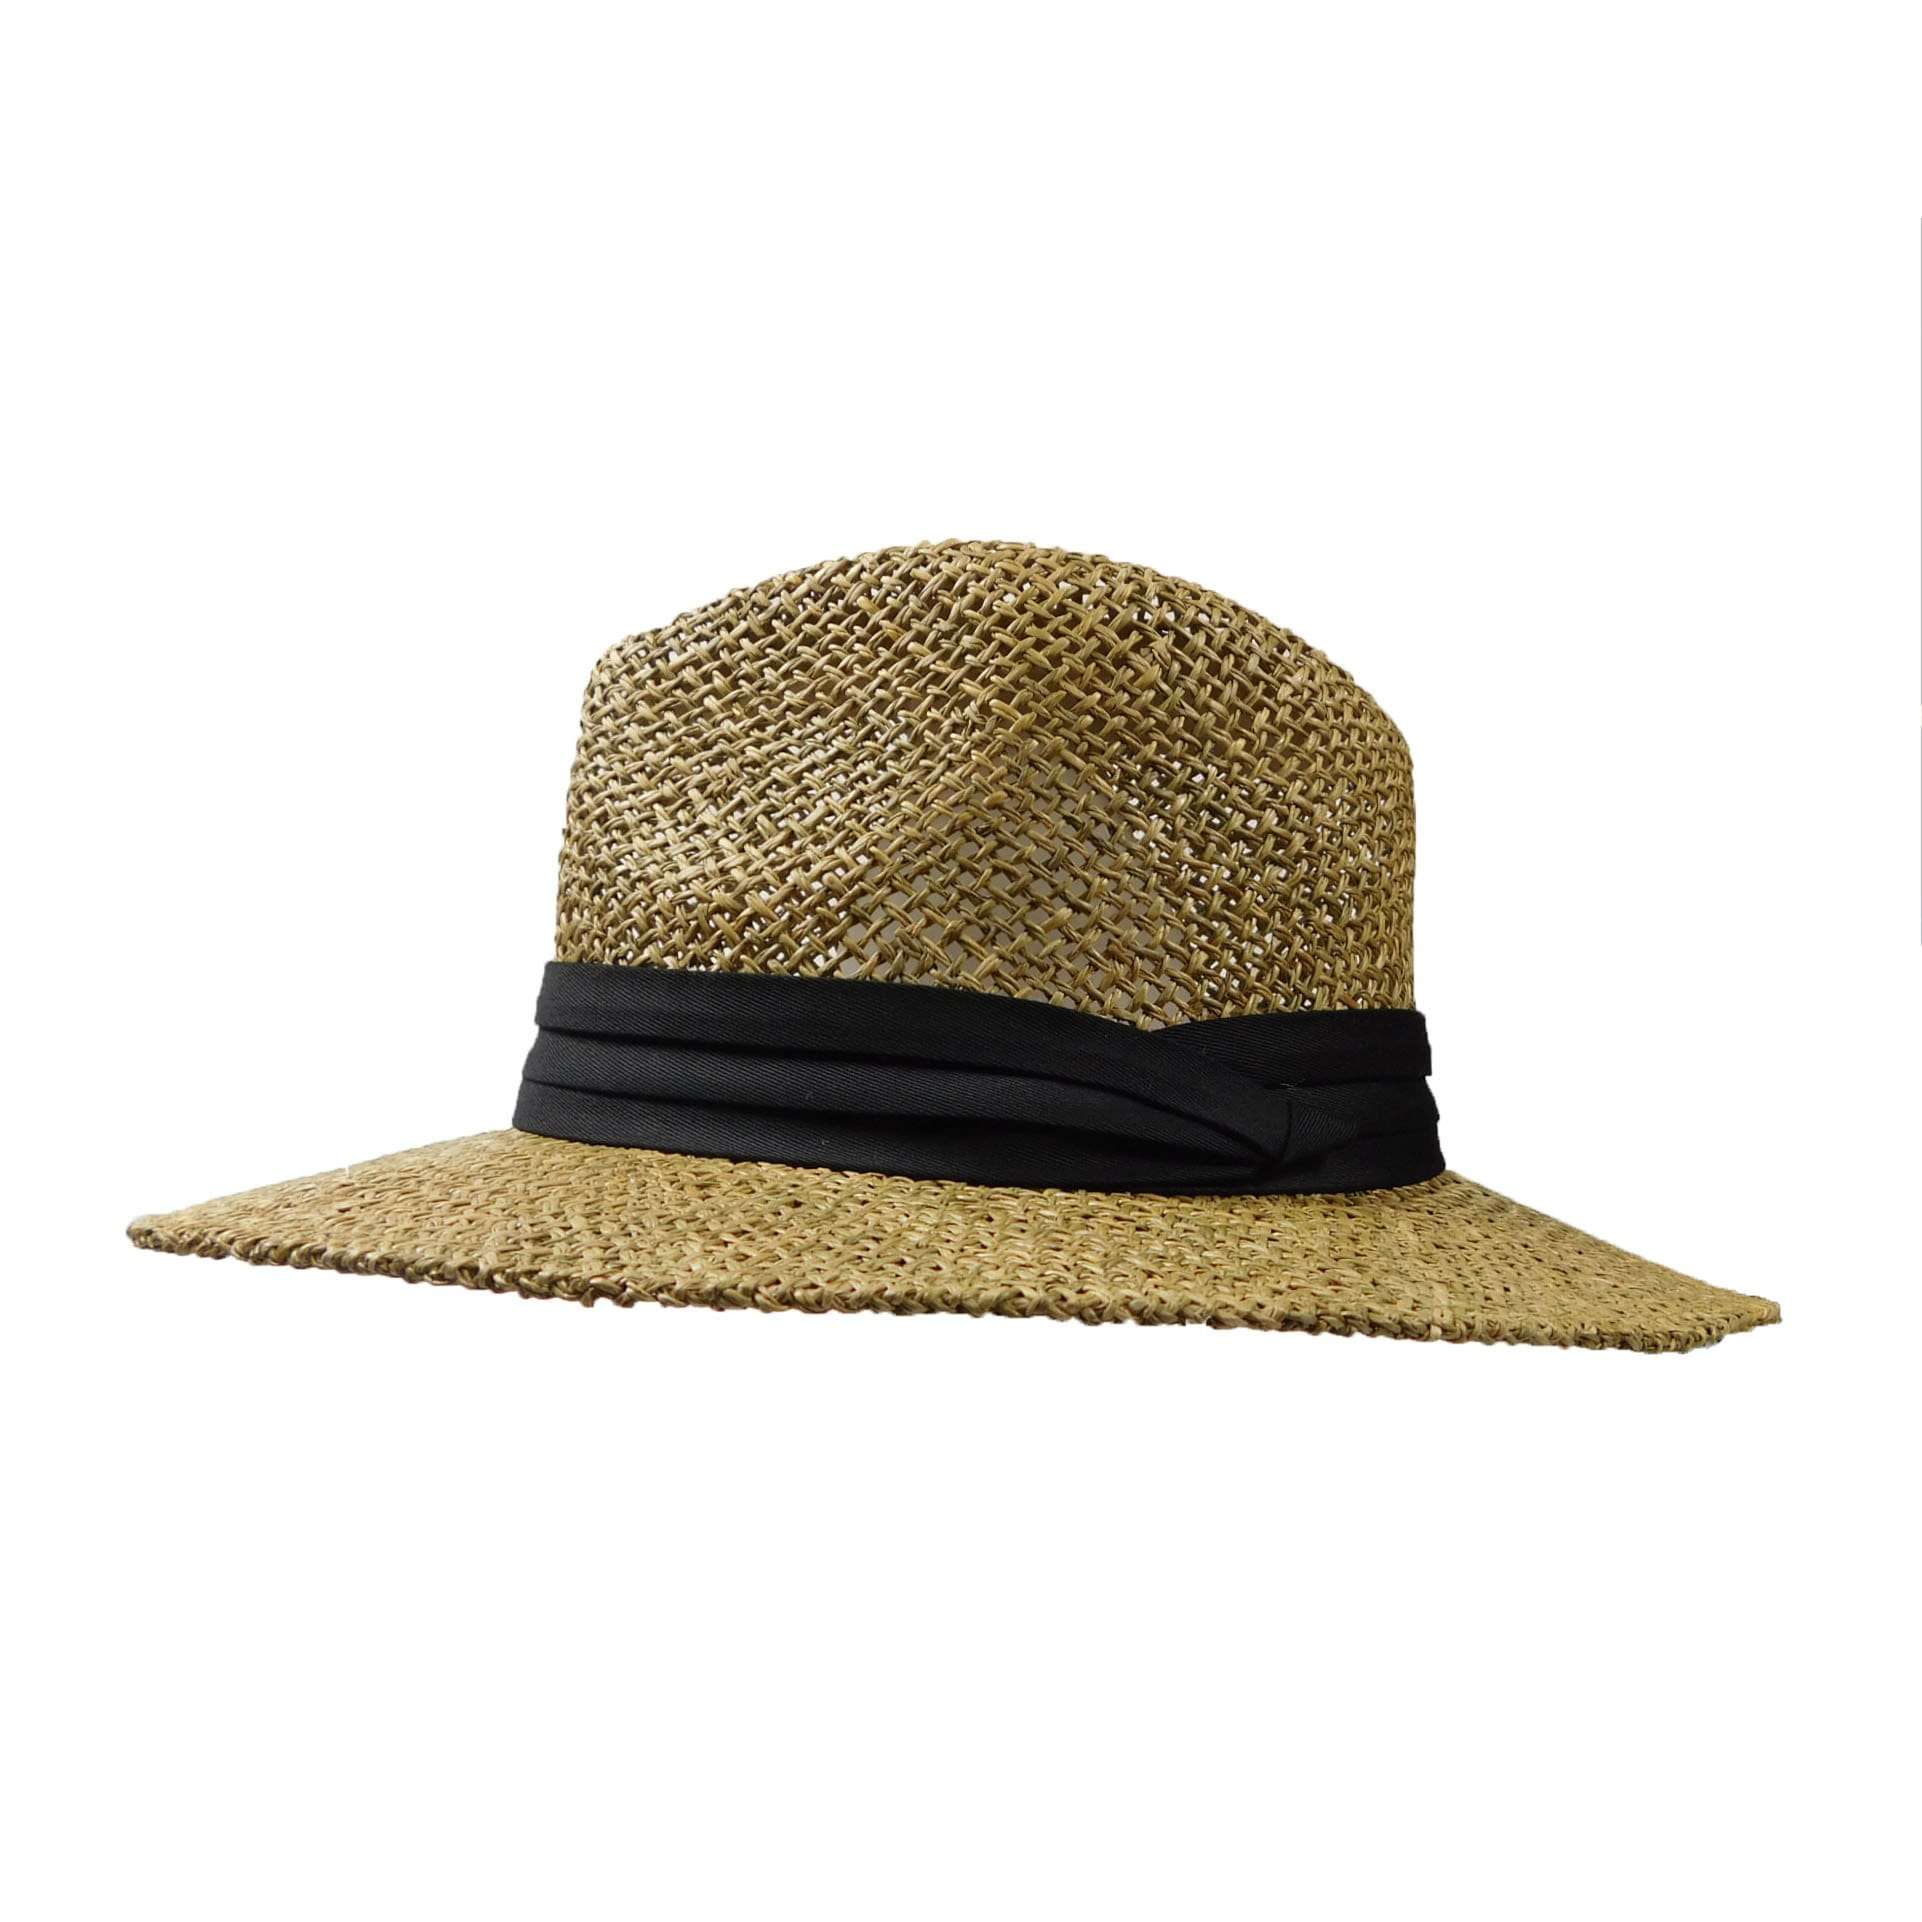 Sea Grass Safari Hat with Black Band - Milani Hats Safari Hat Milani Hats S25nt Natural Large (59 cm) 